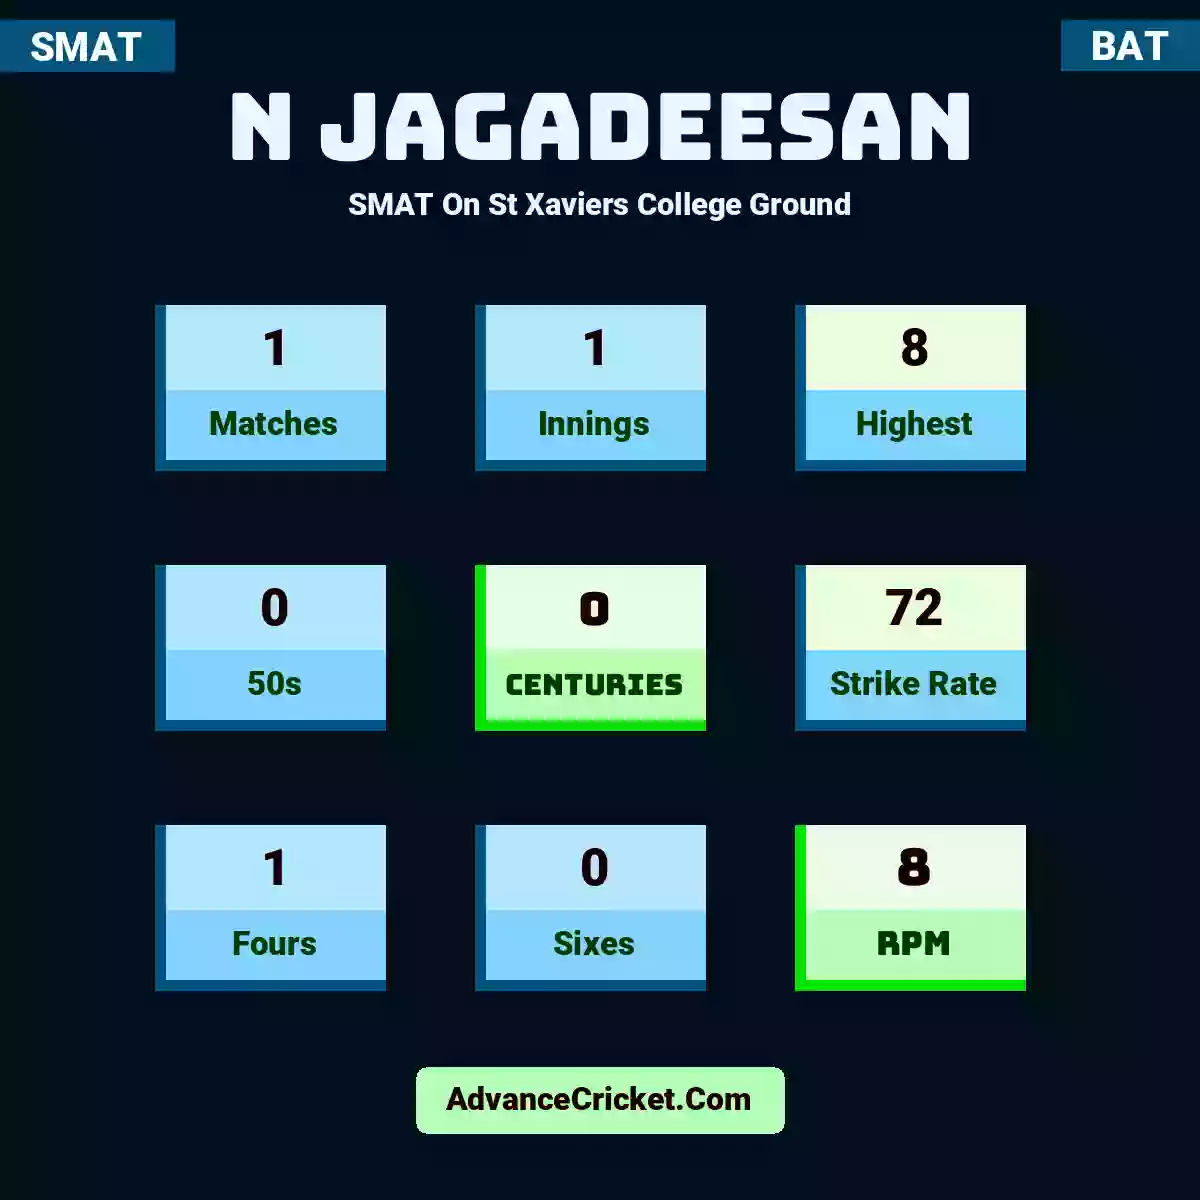 N Jagadeesan SMAT  On St Xaviers College Ground, N Jagadeesan played 1 matches, scored 8 runs as highest, 0 half-centuries, and 0 centuries, with a strike rate of 72. N.Jagadeesan hit 1 fours and 0 sixes, with an RPM of 8.